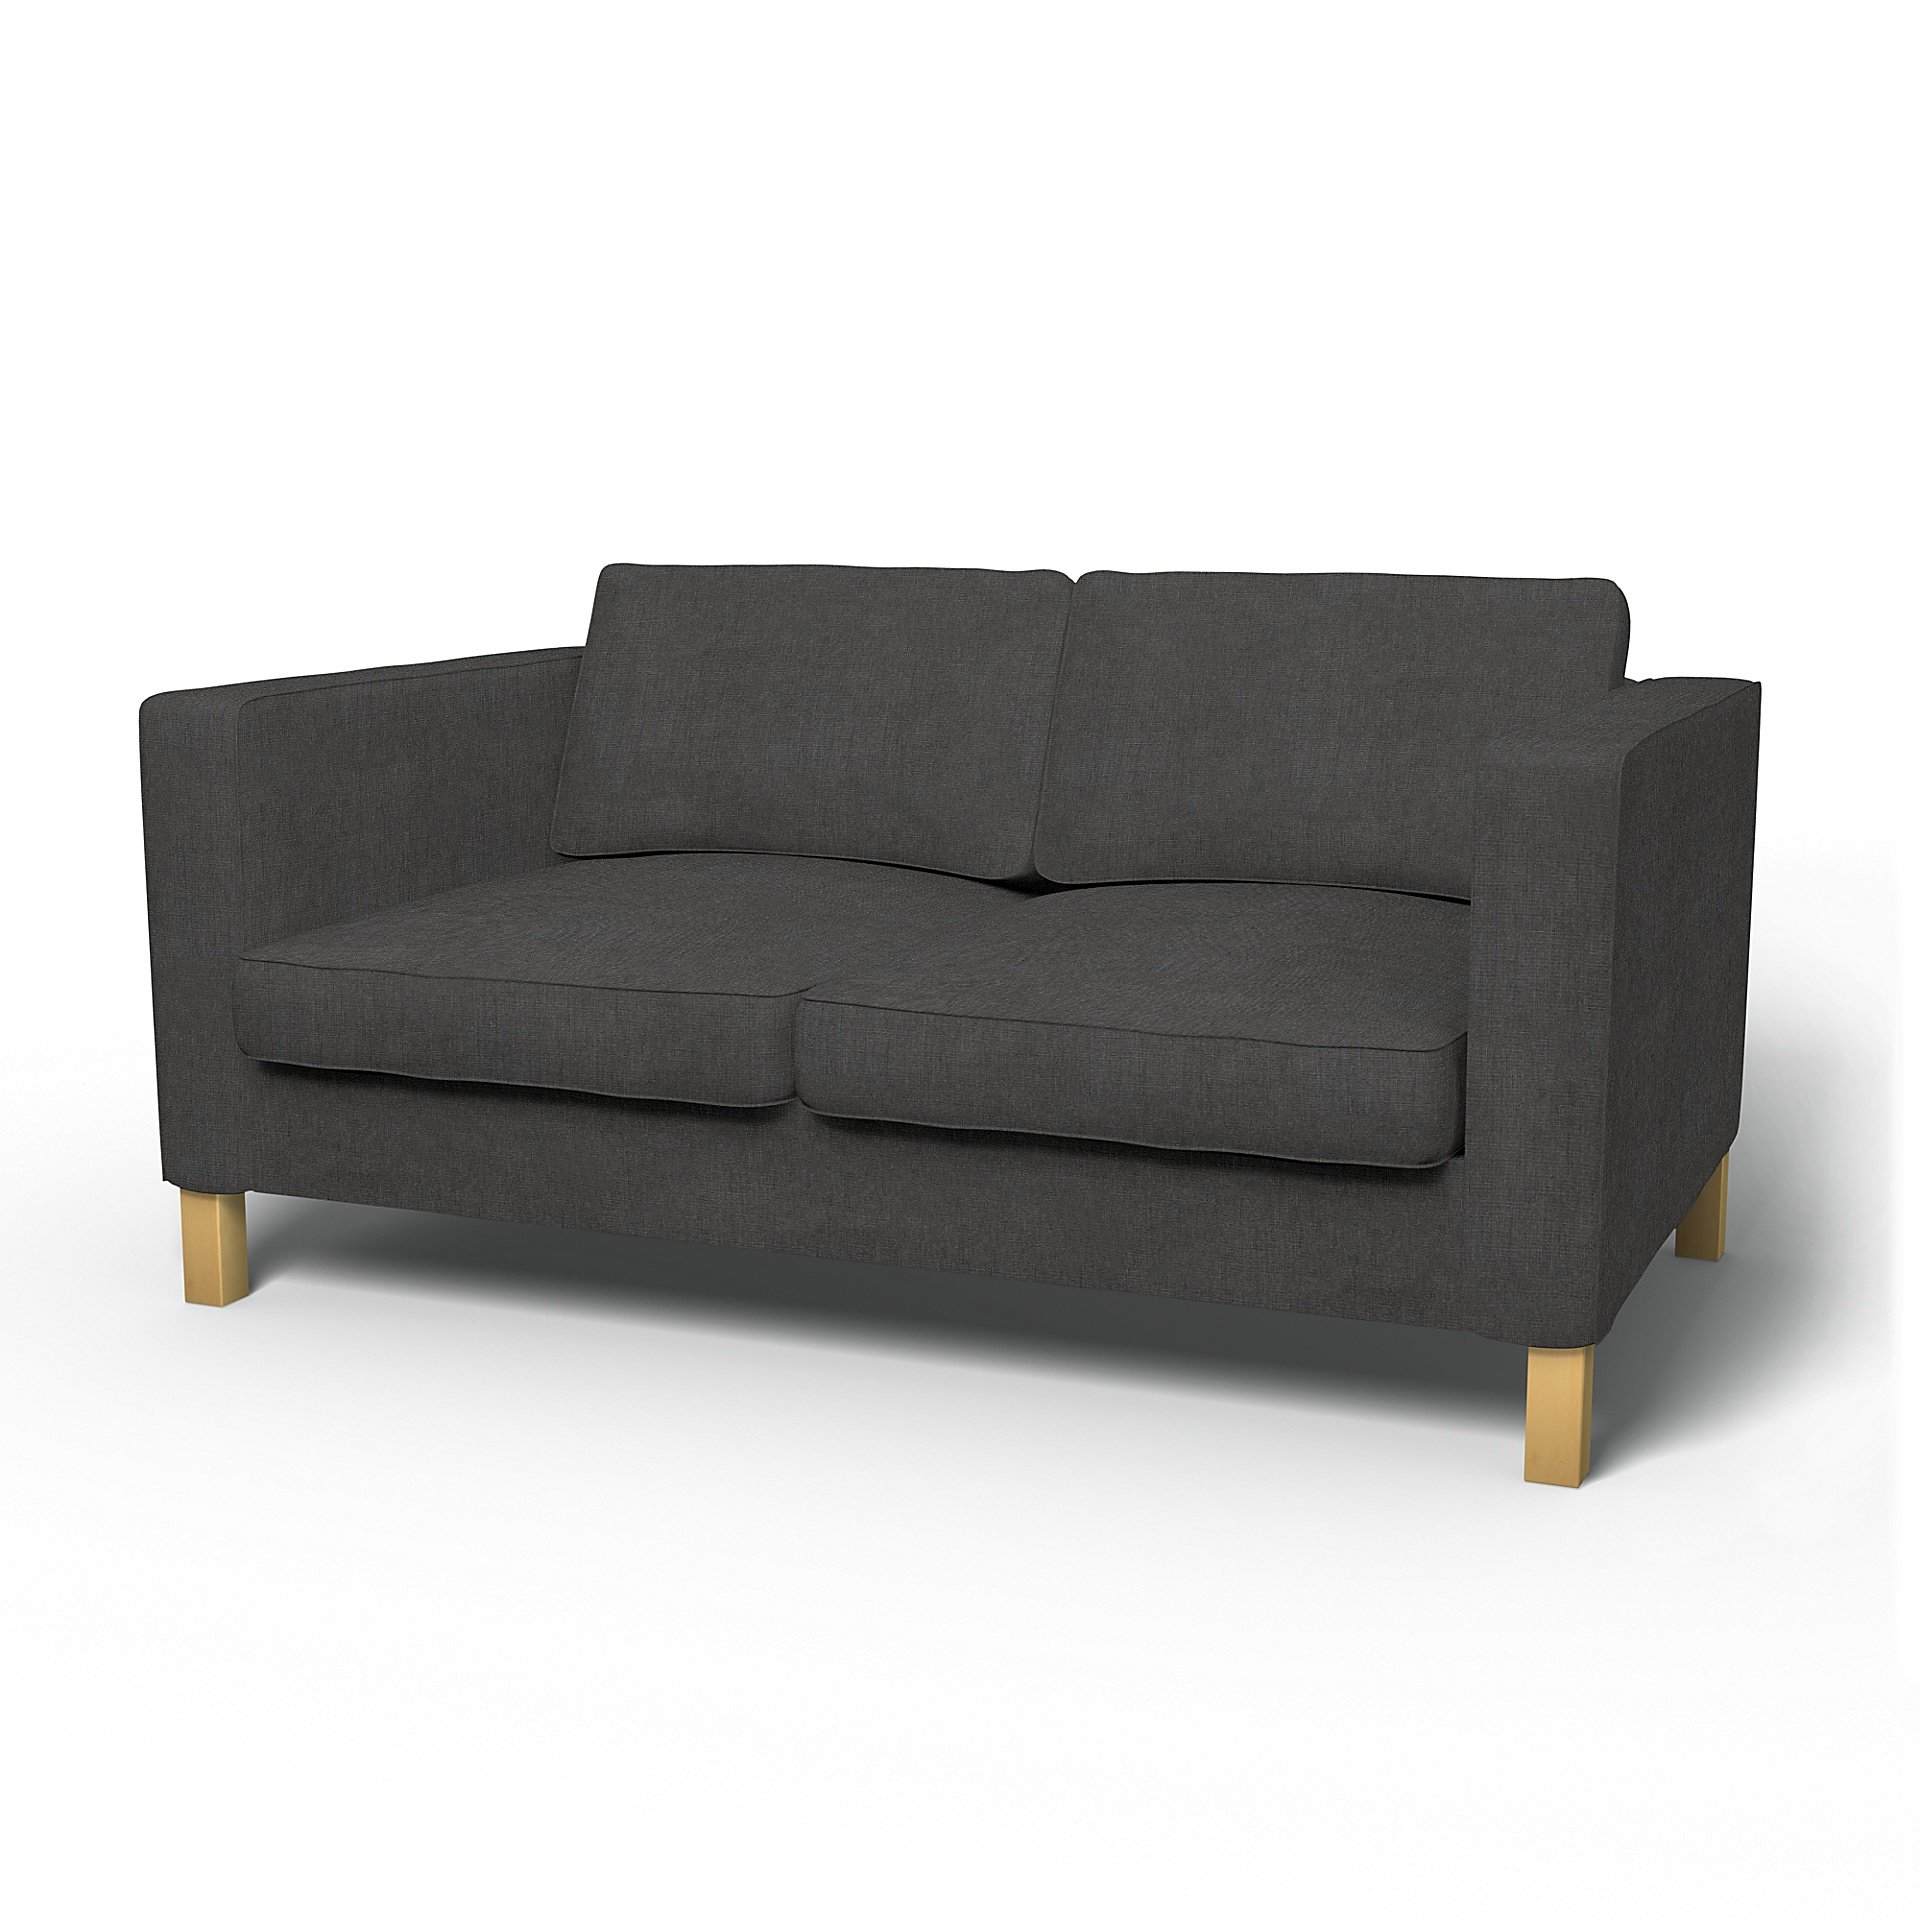 IKEA - Karlanda 2 Seater Sofa Cover, Espresso, Linen - Bemz